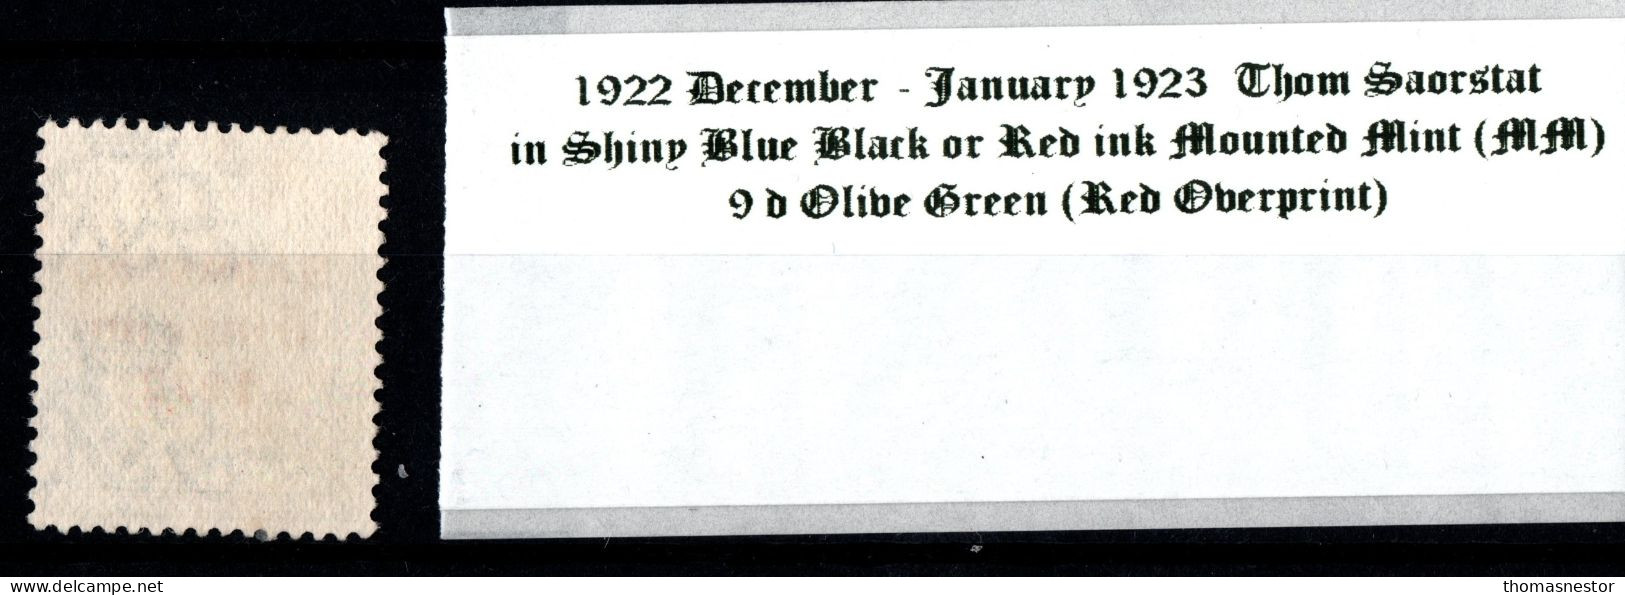 1922 - 1923 Dec-Jan Thom Saorstát In Shiny Blue Black Or Red Ink, 9 D Olive Green (Red Overprint) Mounted Mint (MM) - Ongebruikt